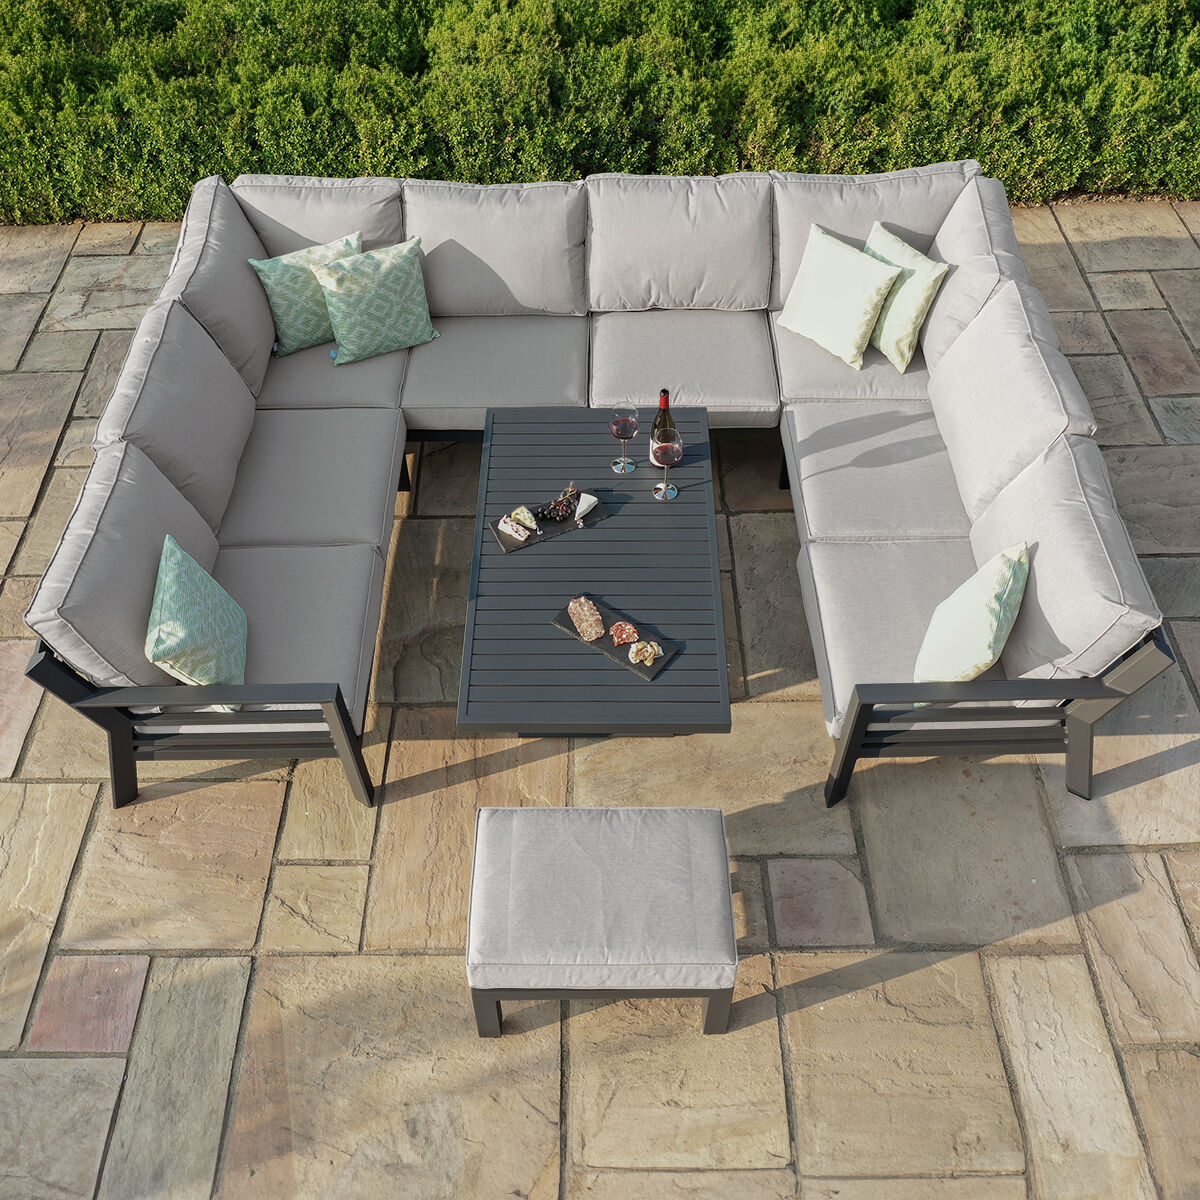 Maze - New York U-Shaped Aluminium Sofa Set with Rising Table - Dove Grey product image